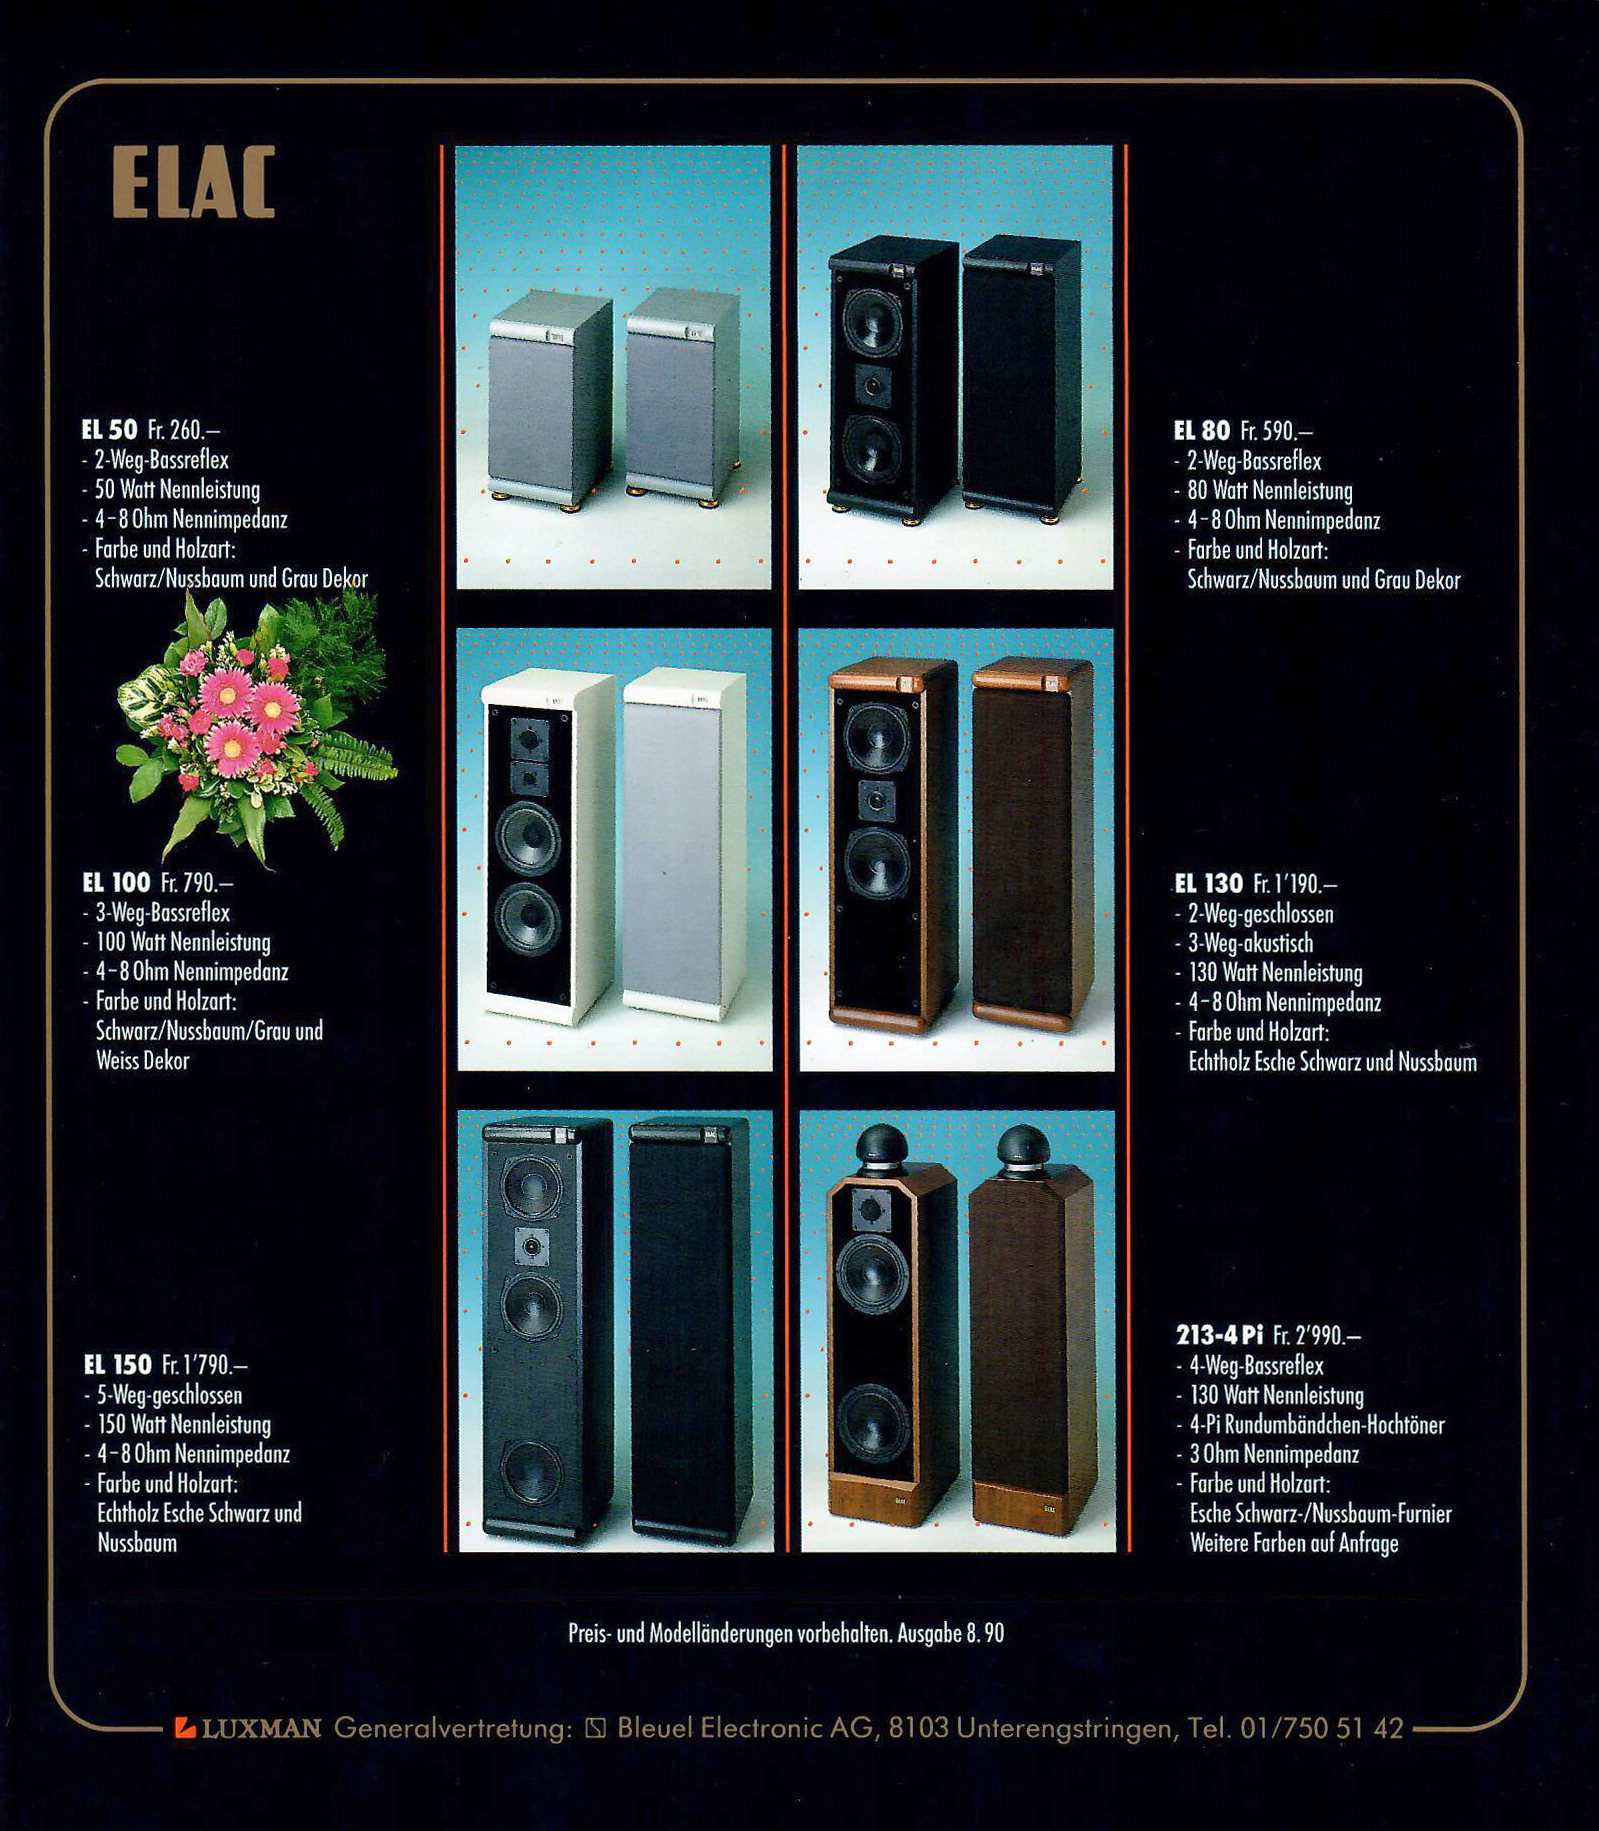 Elac EL-Prospekt-1990.jpg